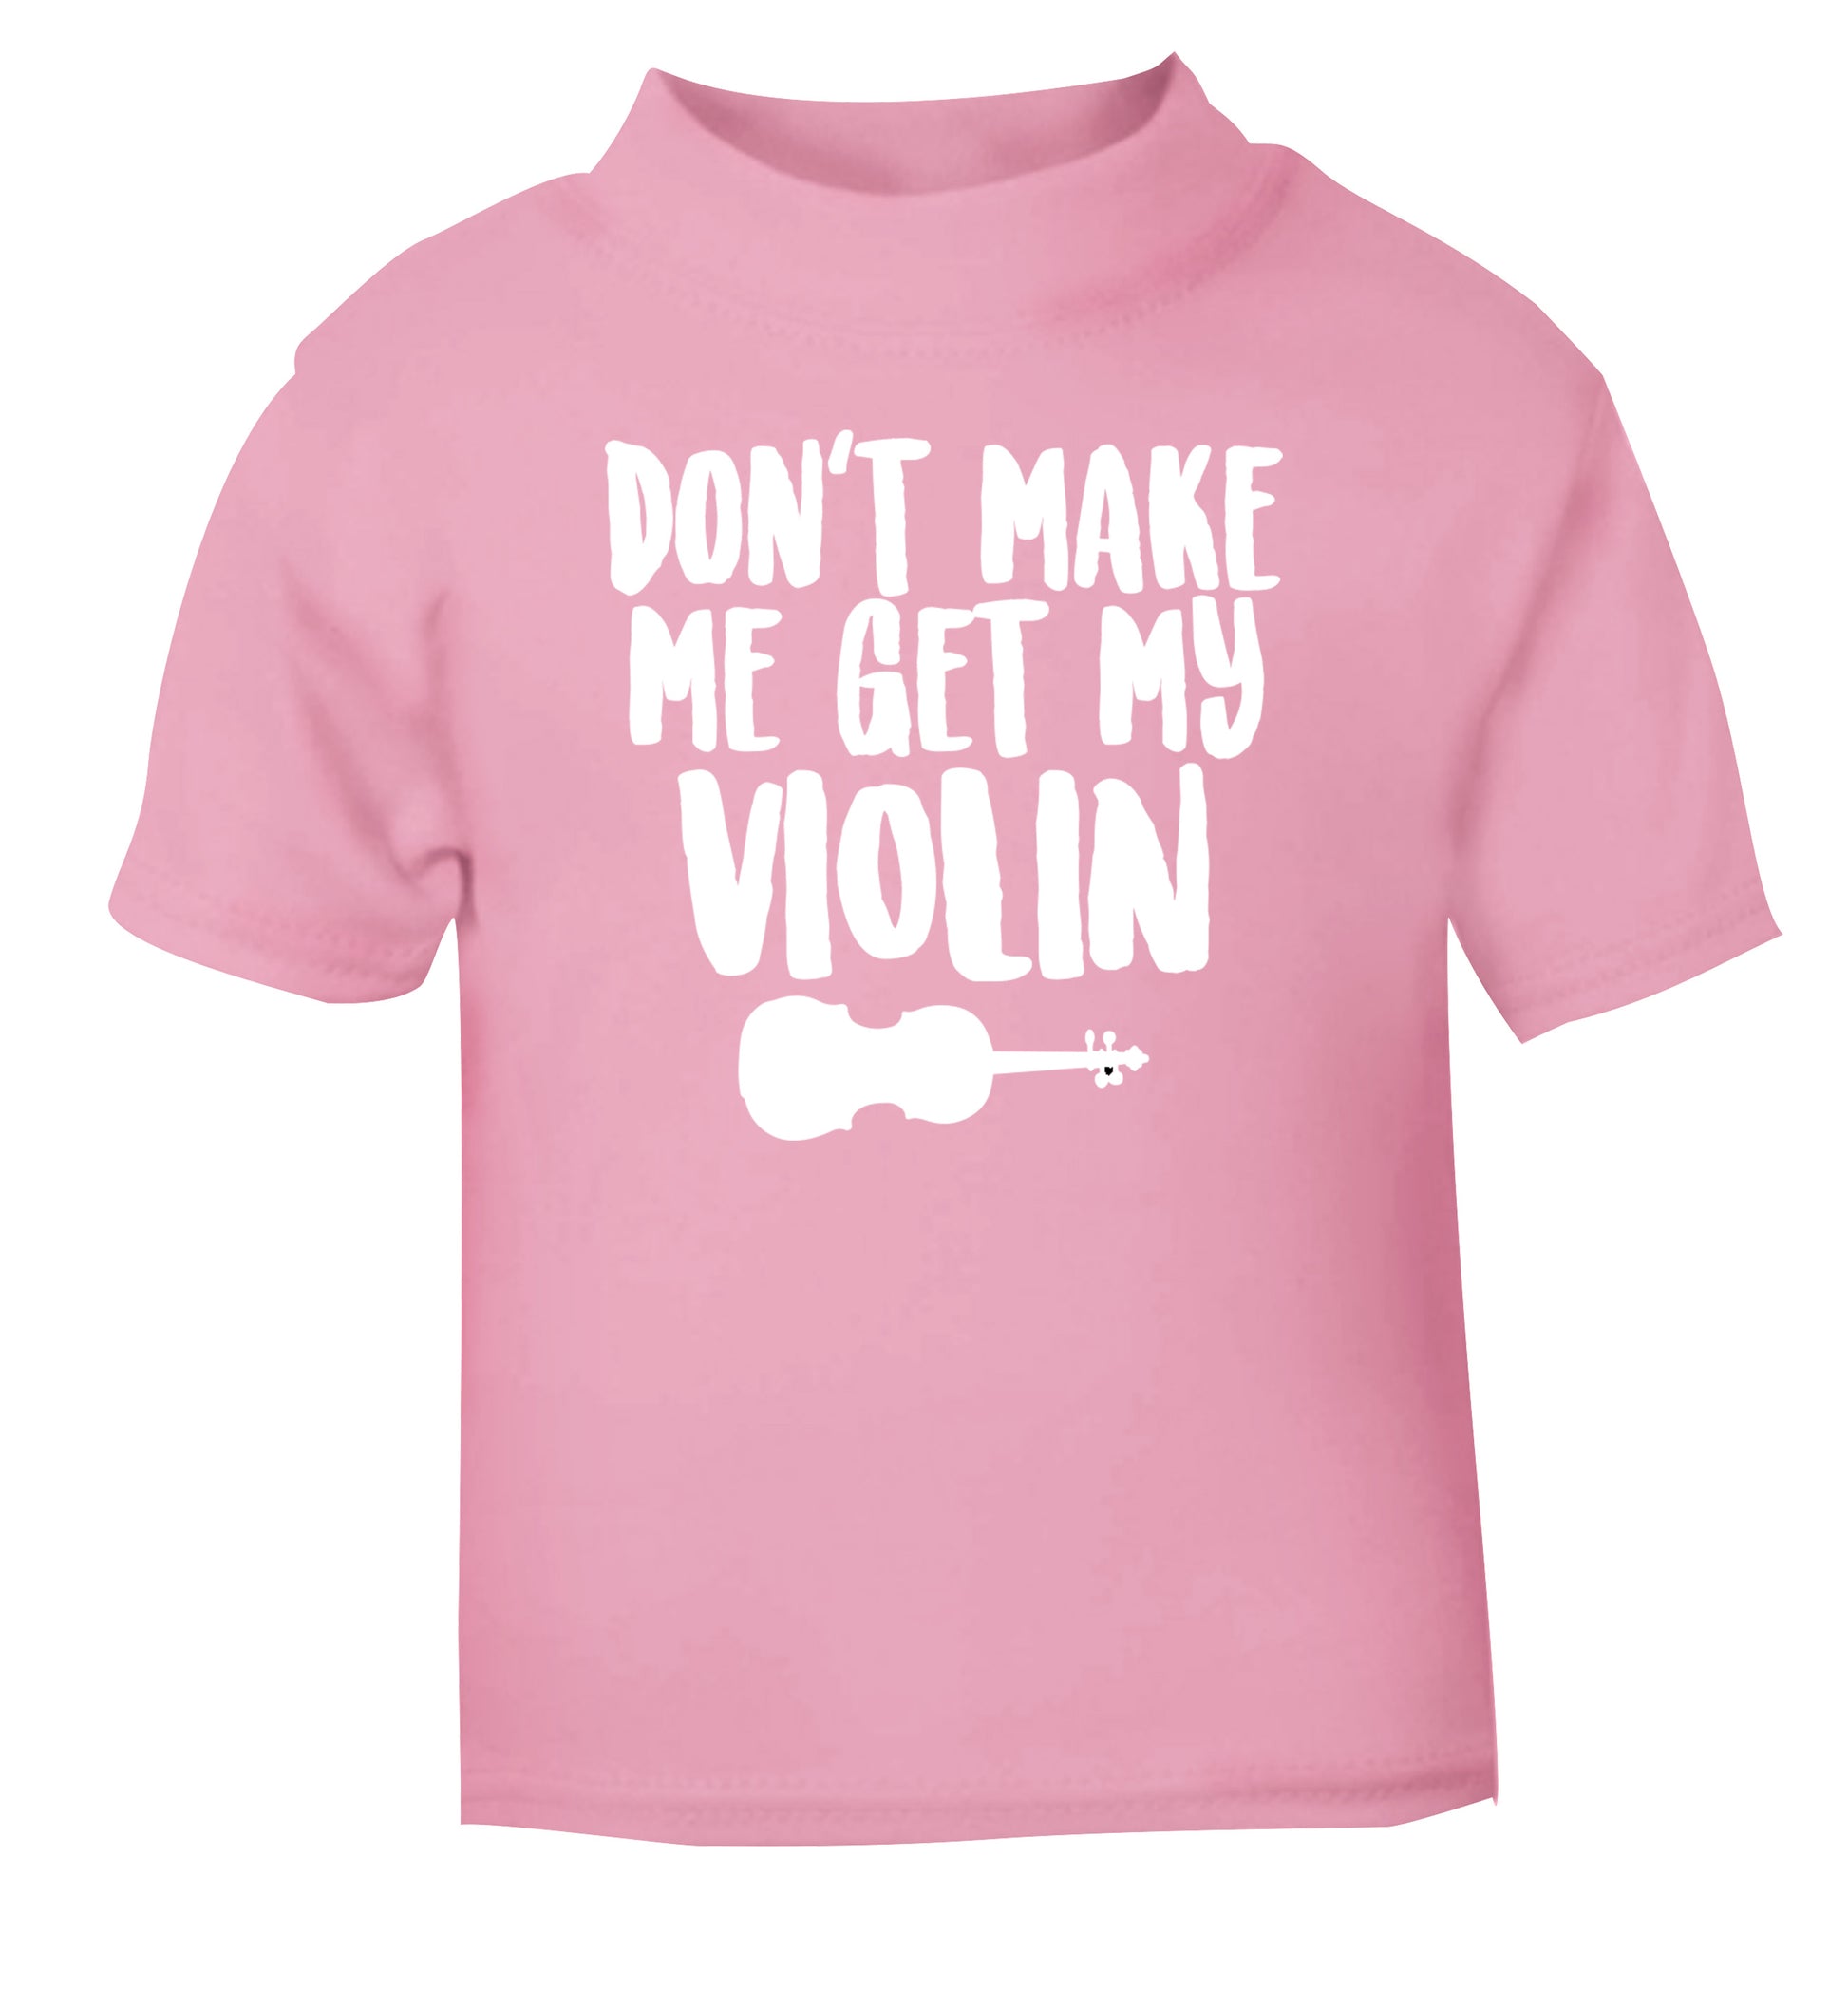 Don't make me get my violin light pink Baby Toddler Tshirt 2 Years